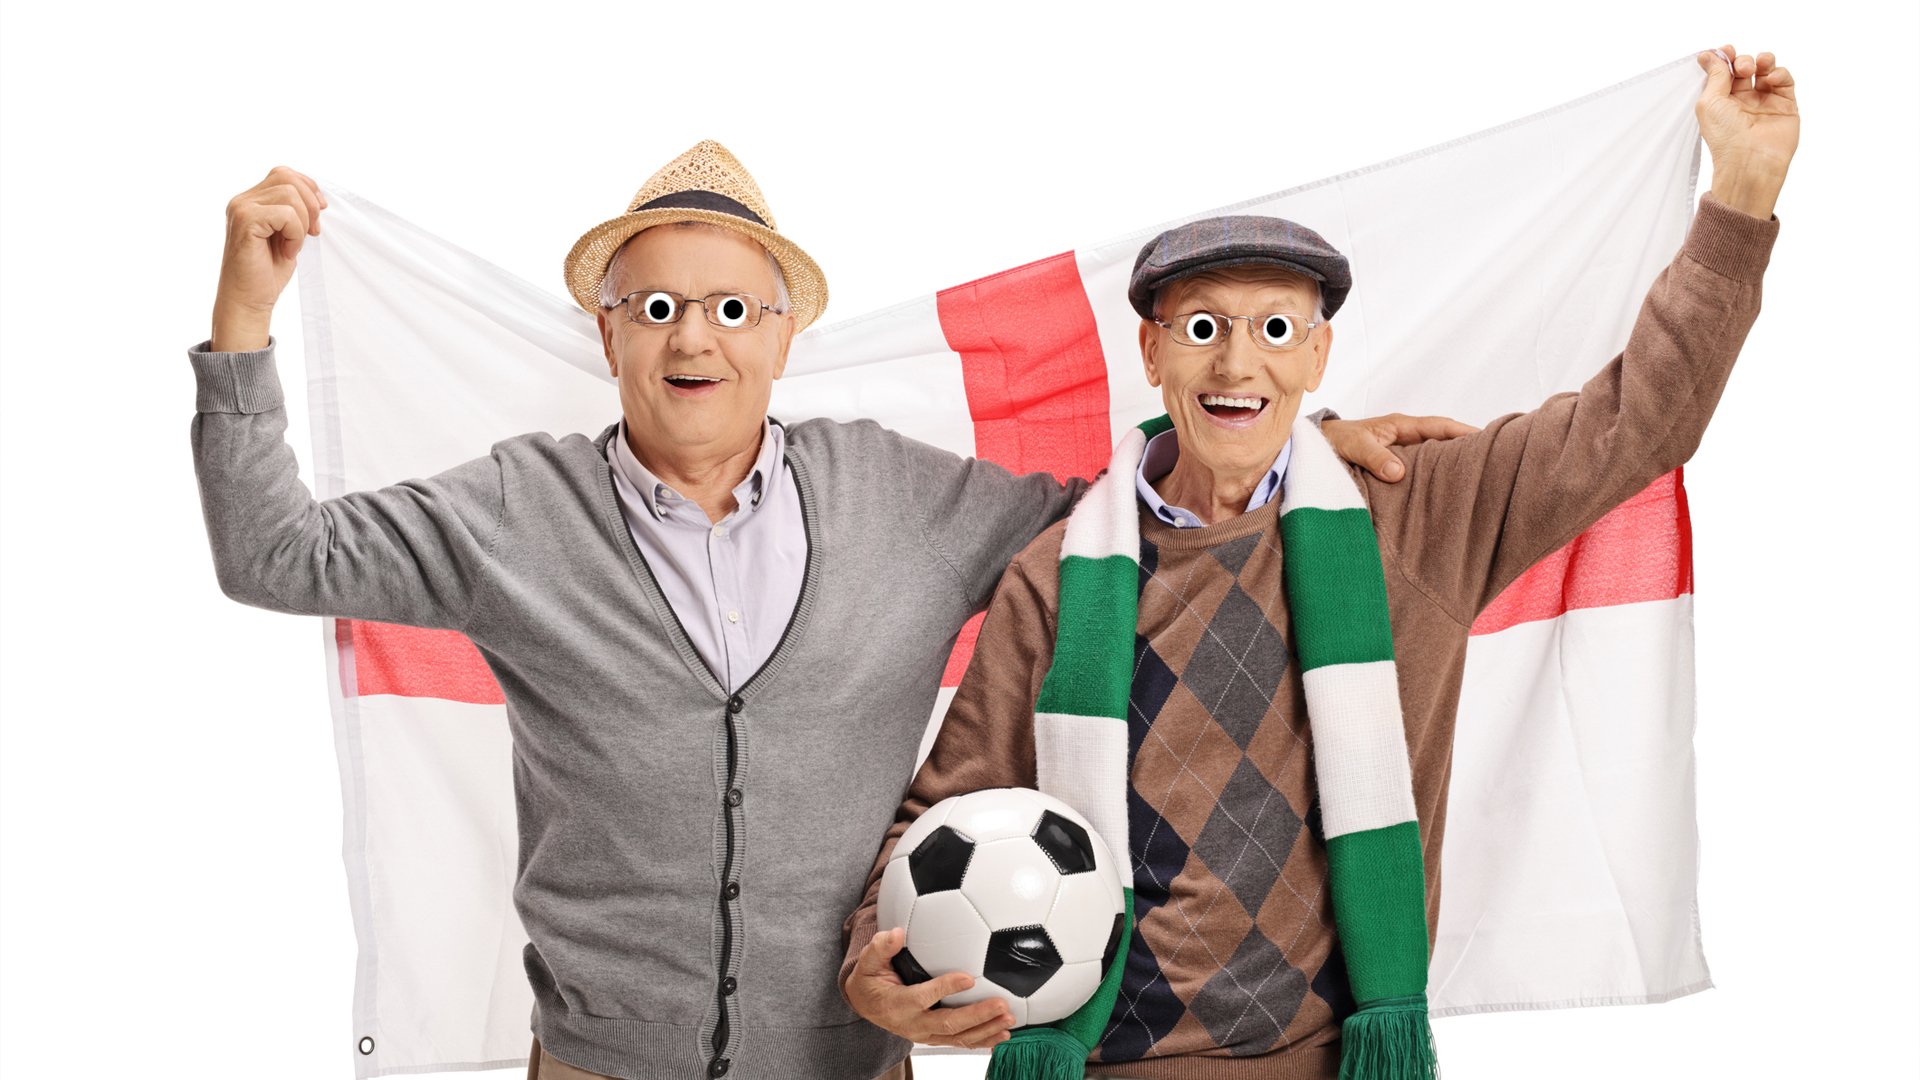 Two elderly football fans celebrating a goal